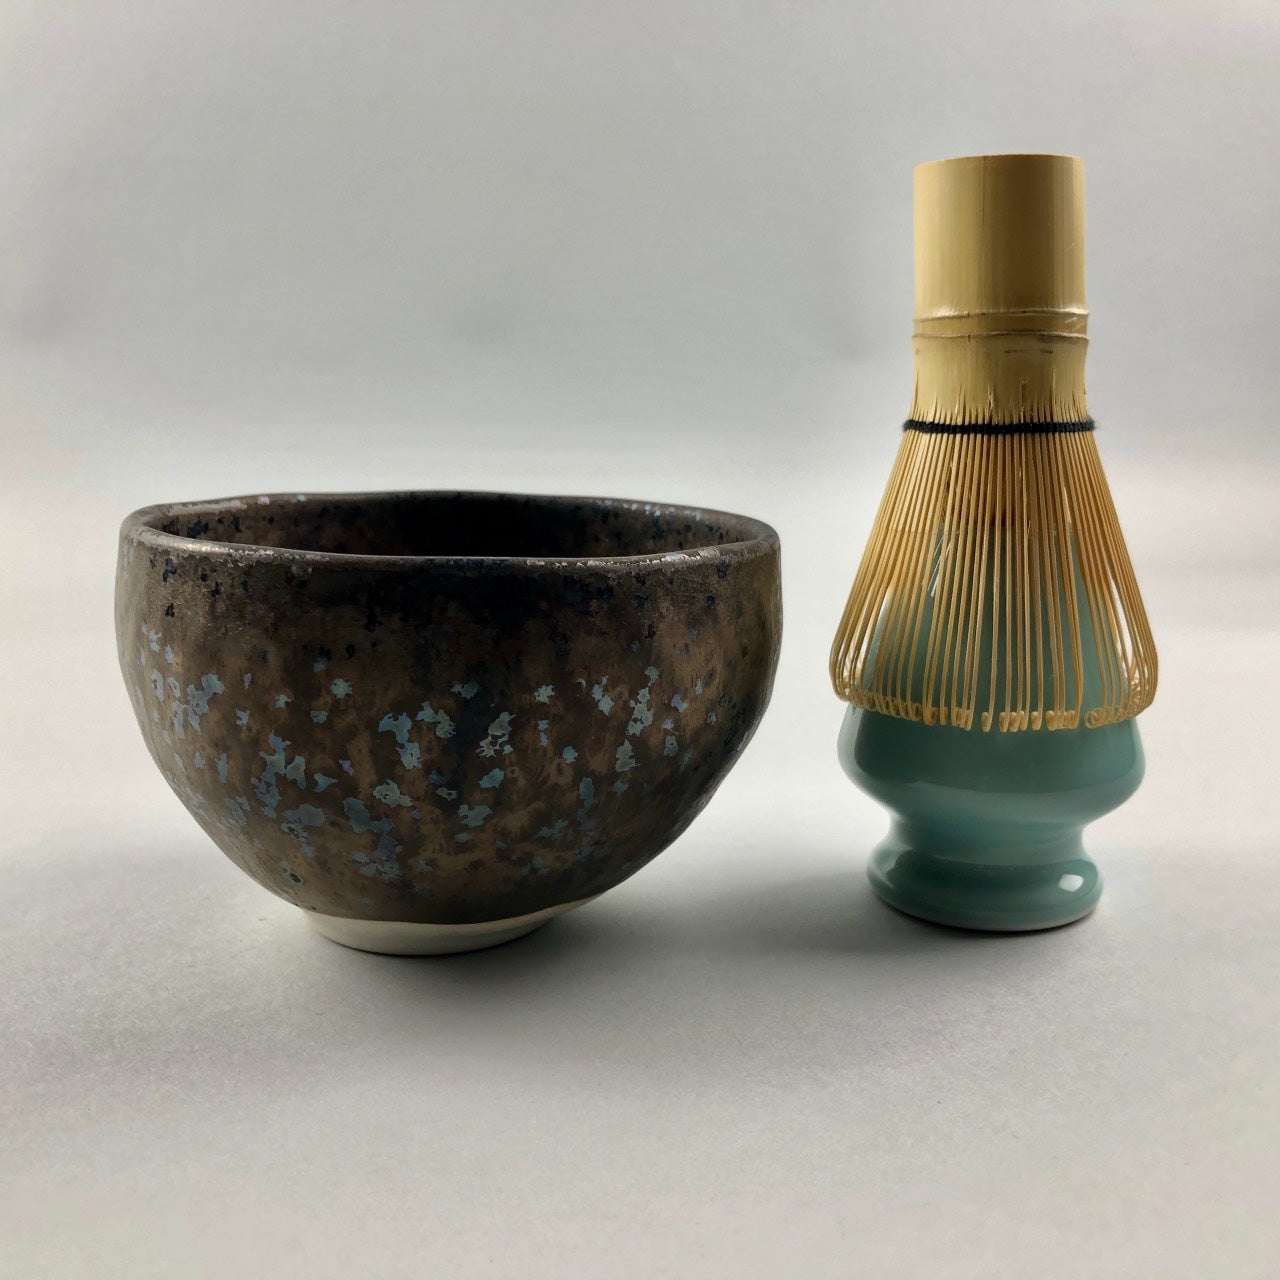 Chasen TEANAGOO EMB-6 Japan Porcelain Matcha Bowl and Matcha Whisk 2 pcs/Boxes. 18OZ / 510 ML Mat Light Light with Black Seam Set Set Packing 